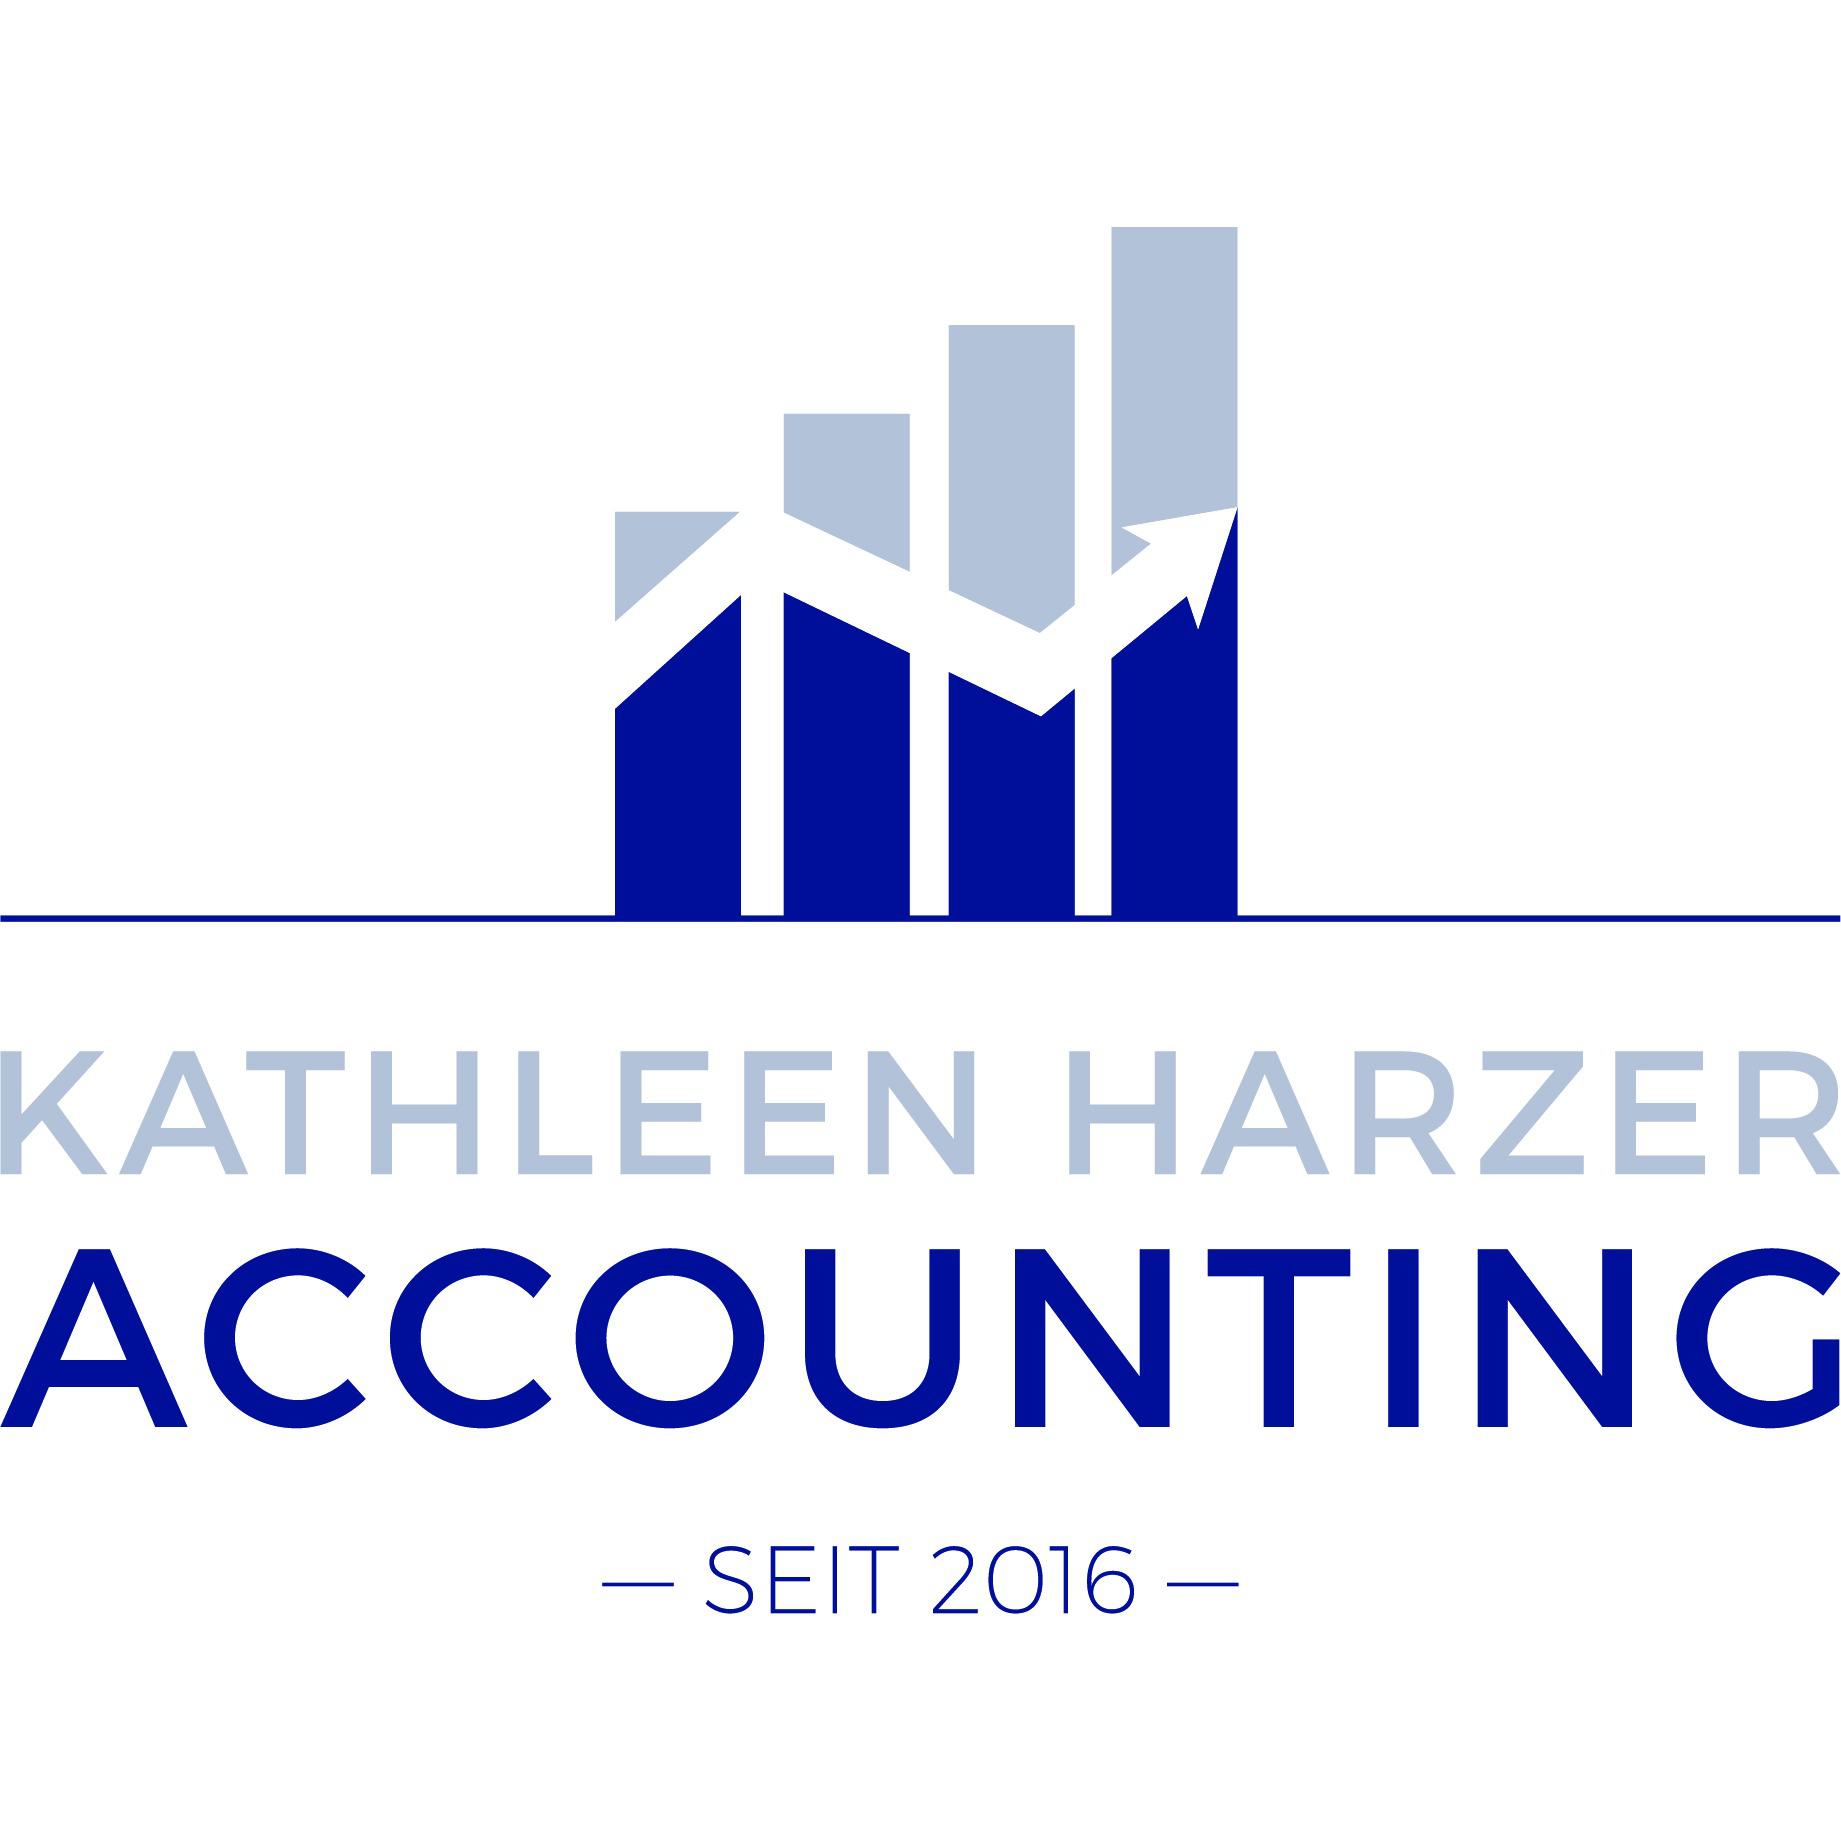 Kathleen Harzer Accounting Logo